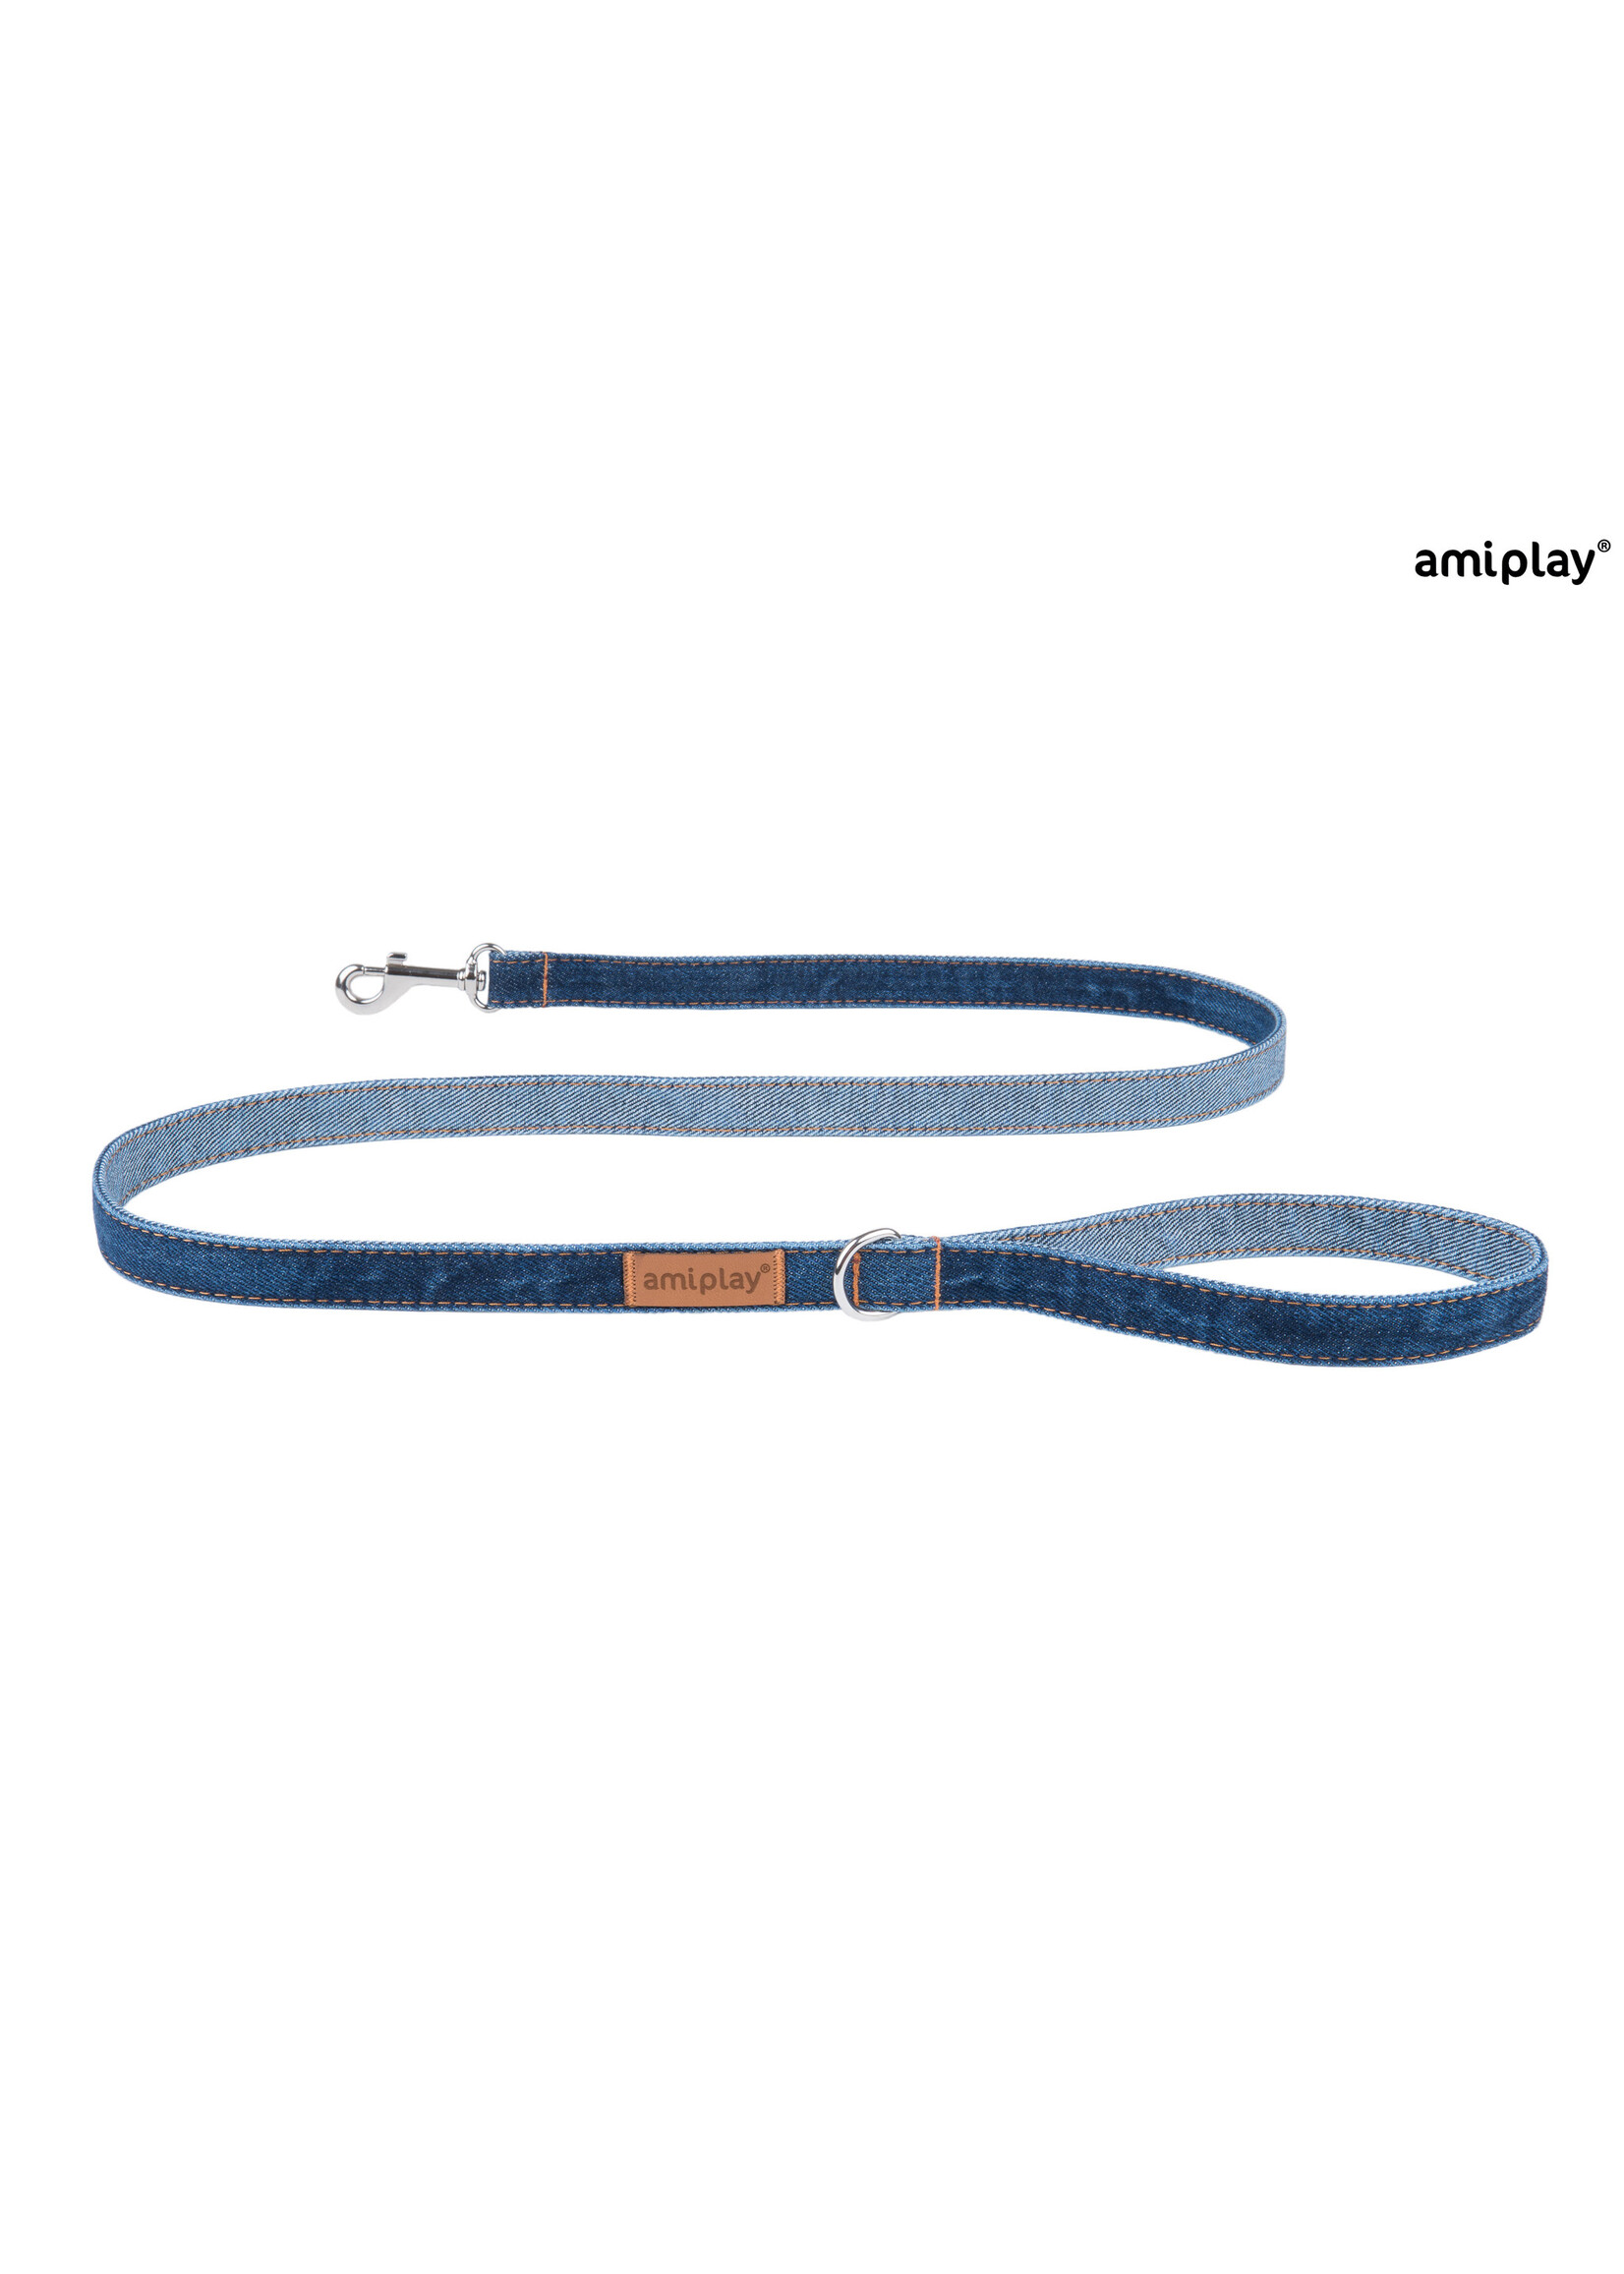 Amiplay Leiband Denim donker blauw  maat-XL / 140x2.5cm